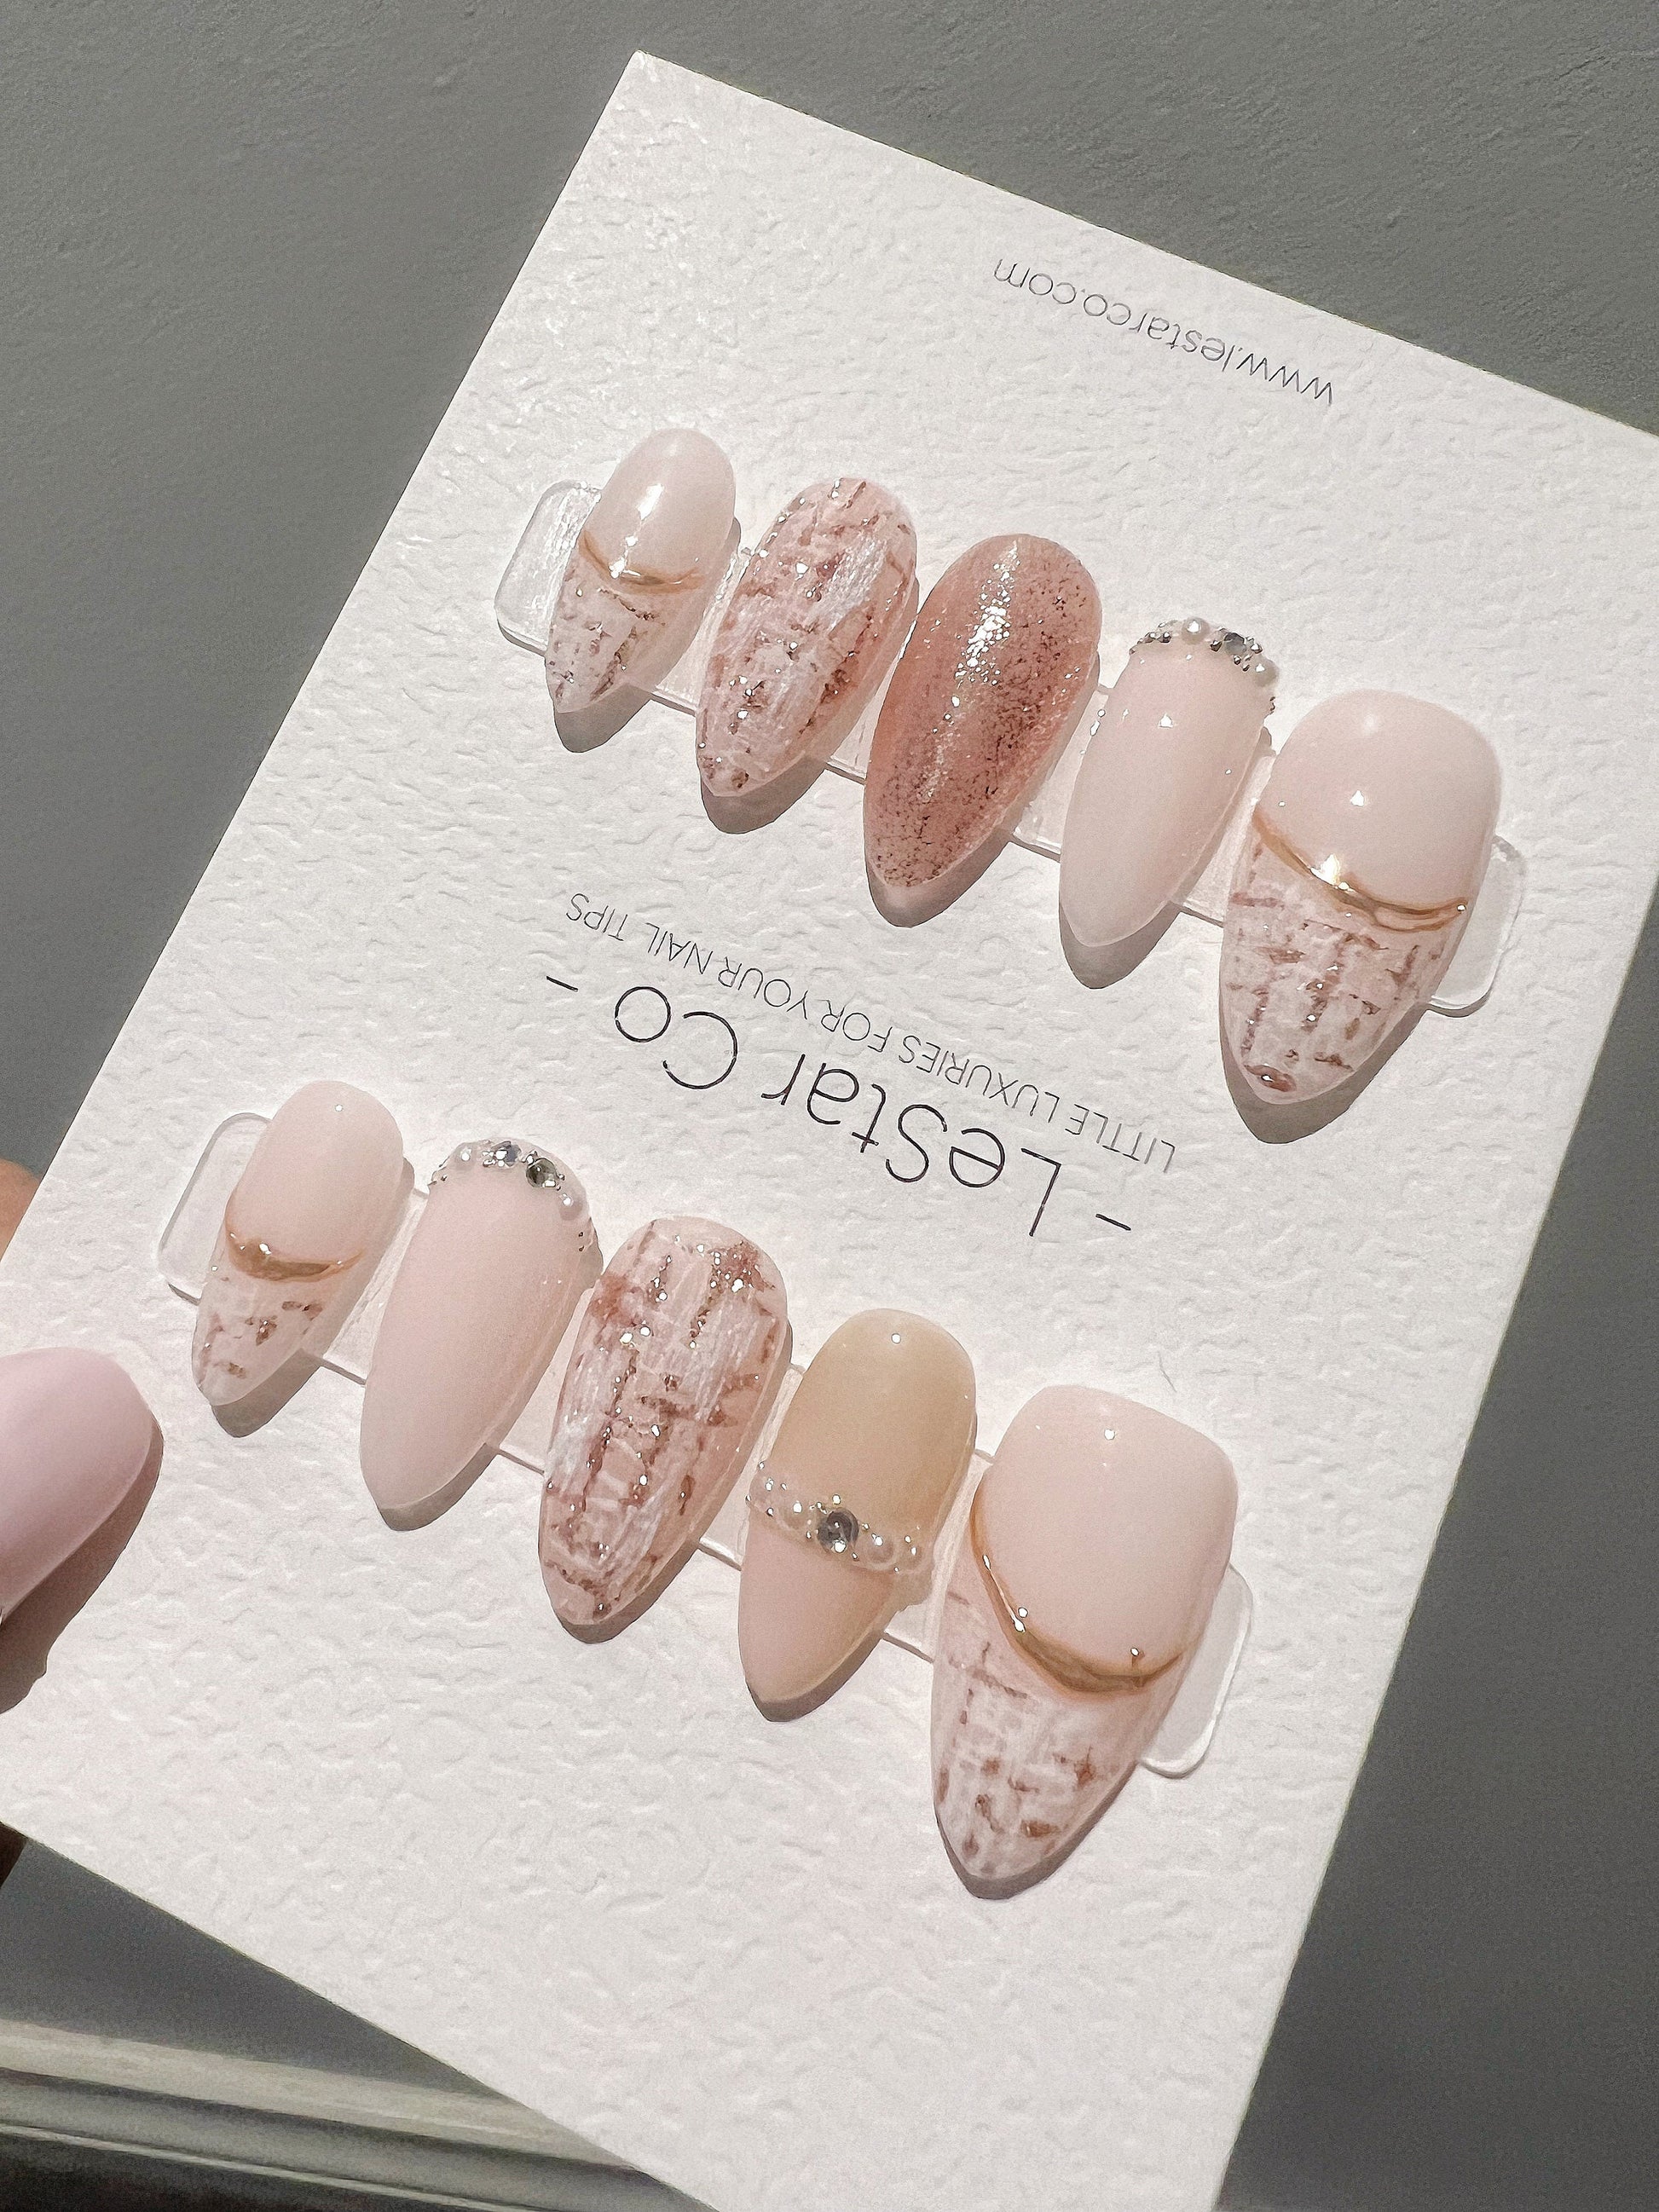 Reusable Pink Romance | Premium Press on Nails Gel | Fake Nails | Cute Fun Colorful Gel Nail Artist faux nails TT258